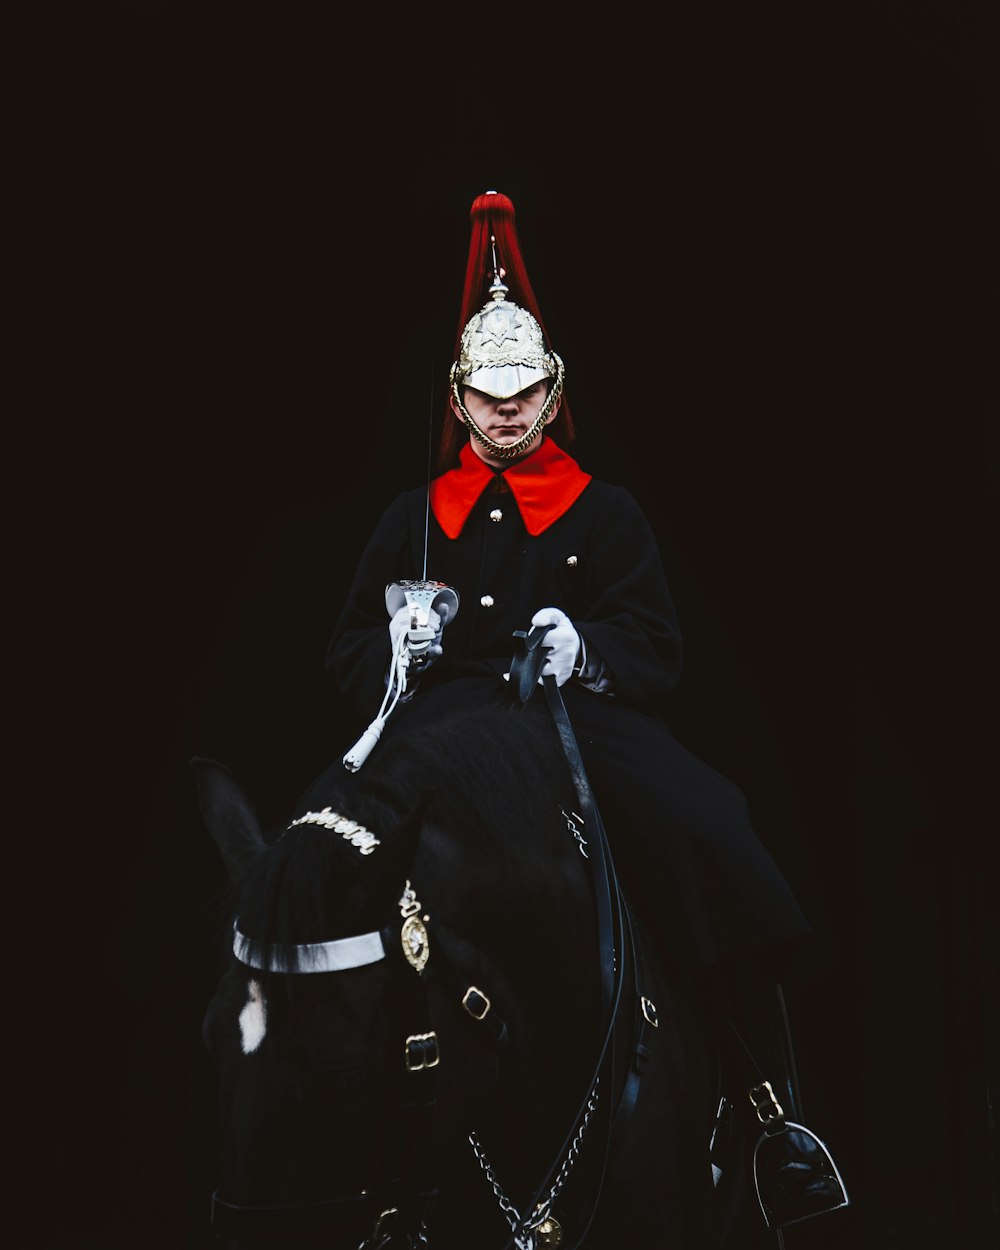 man riding horse